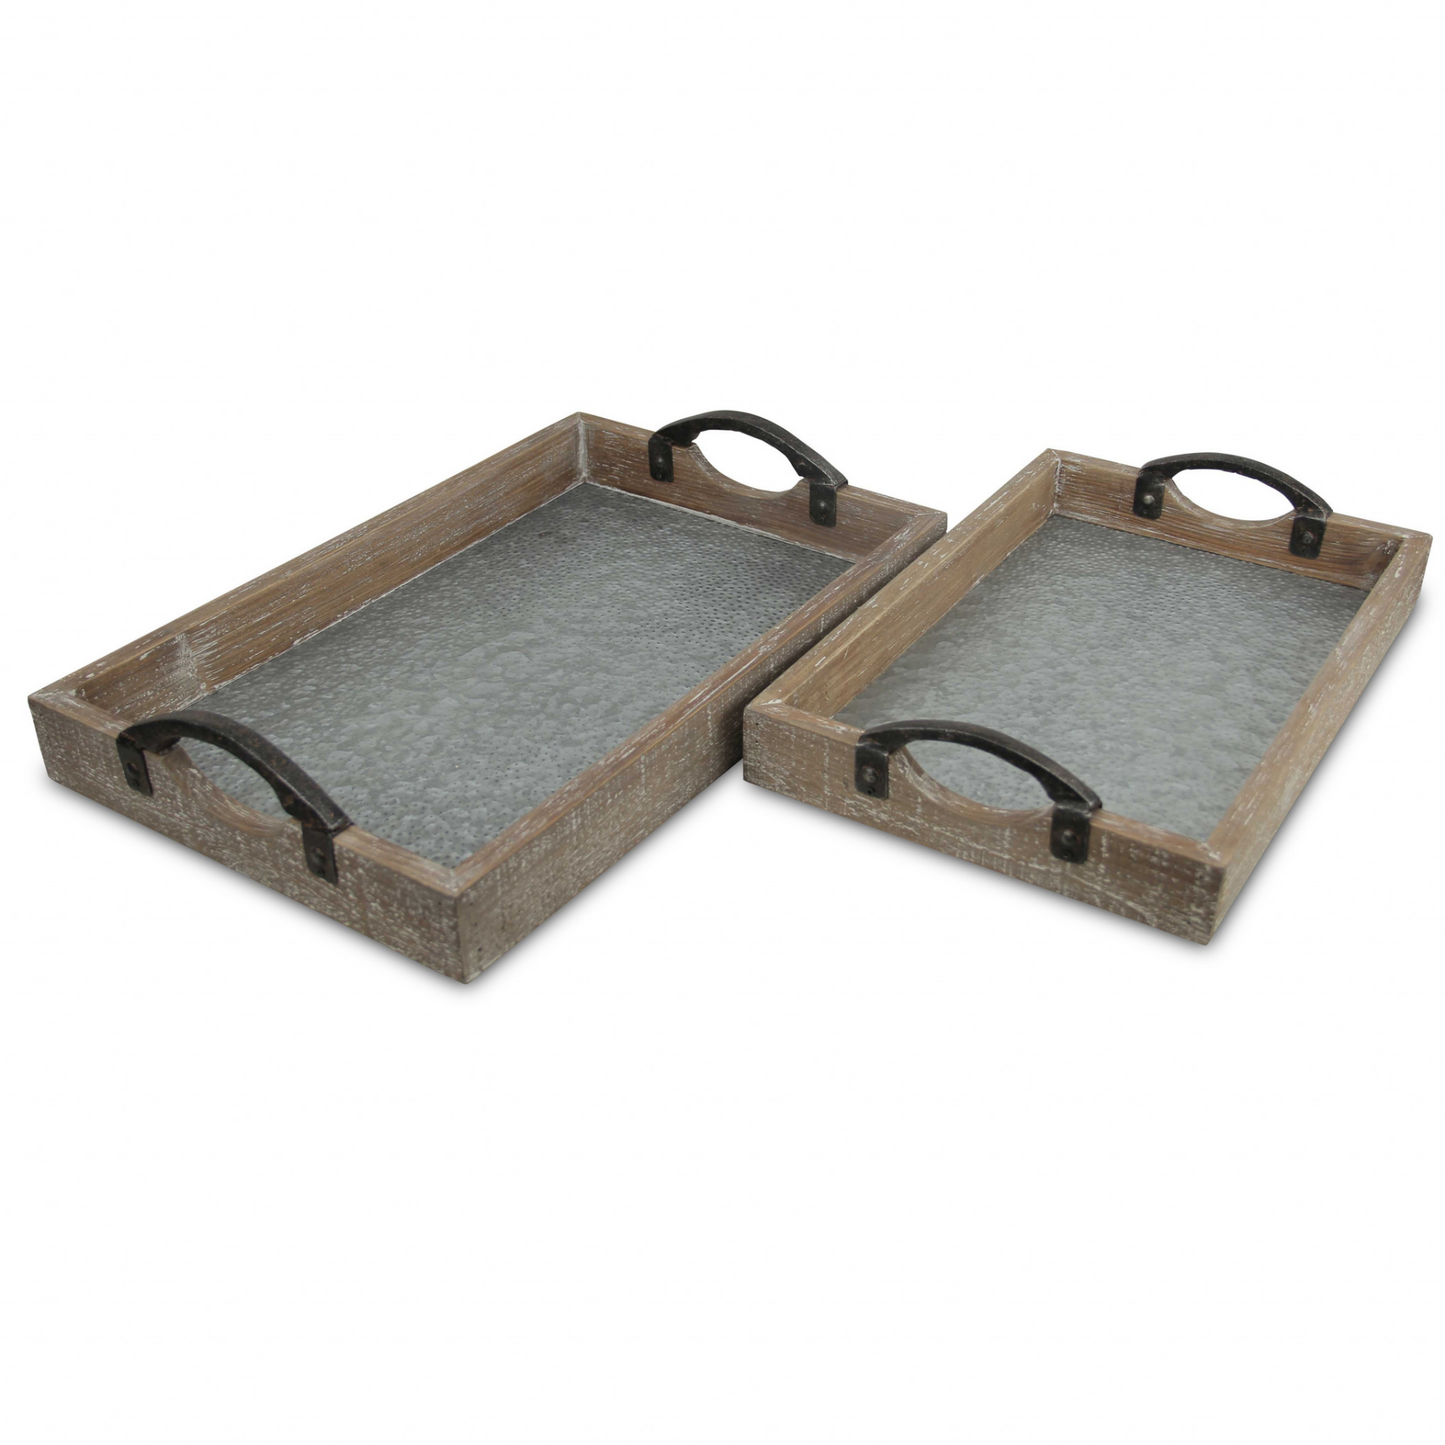 19" Gray Rectangular Metal Handmade Tray With Handles - Versatile and Stylish